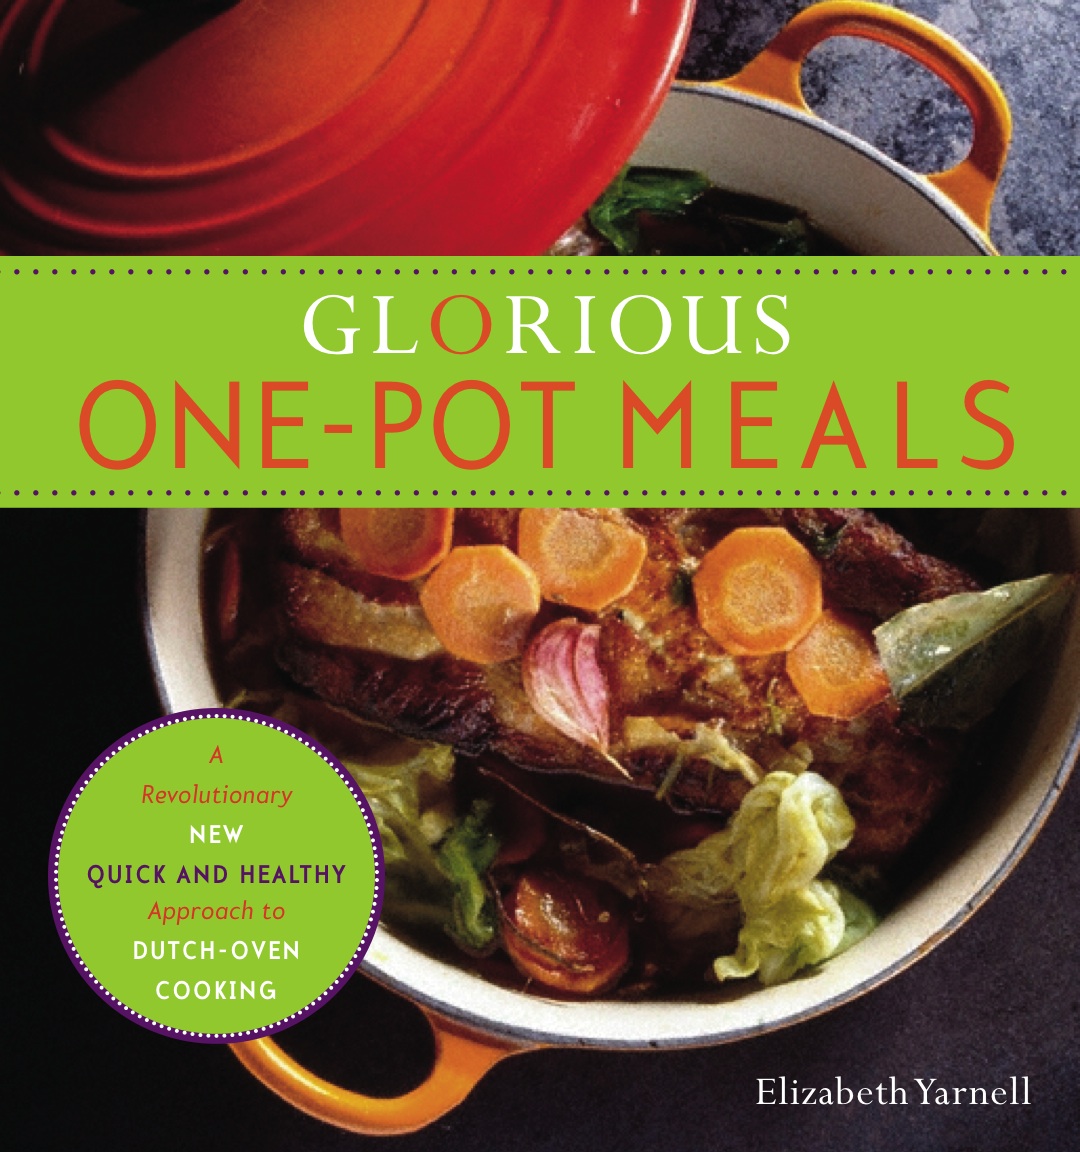 Glorious One-Pot Meals cookbook